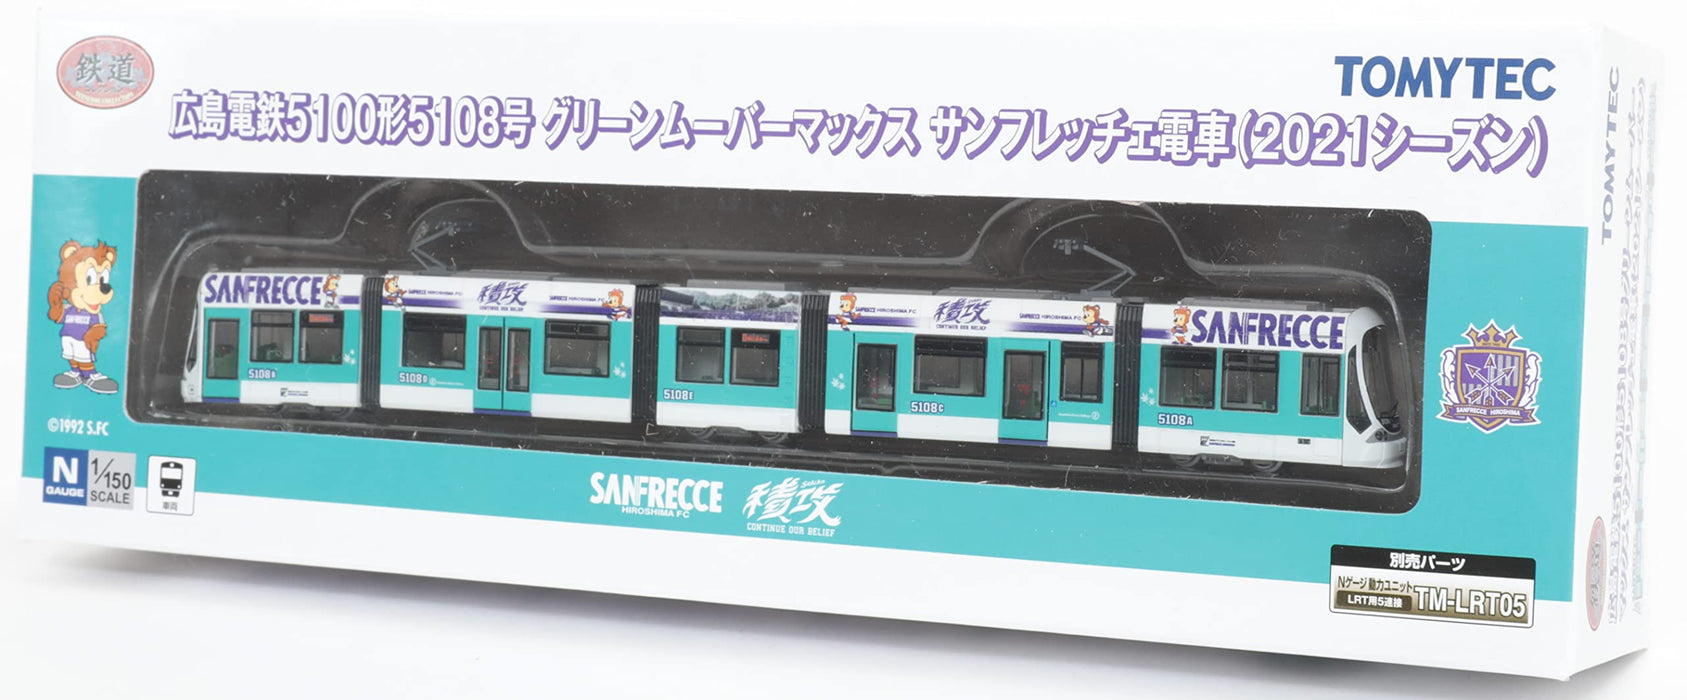 Tomytec Railway Collection Hiroshima Electric Railway Typ 5100 Nr. 5108 Green Mover Max Sanfrecce Zug 2021 Diorama Japan 316602